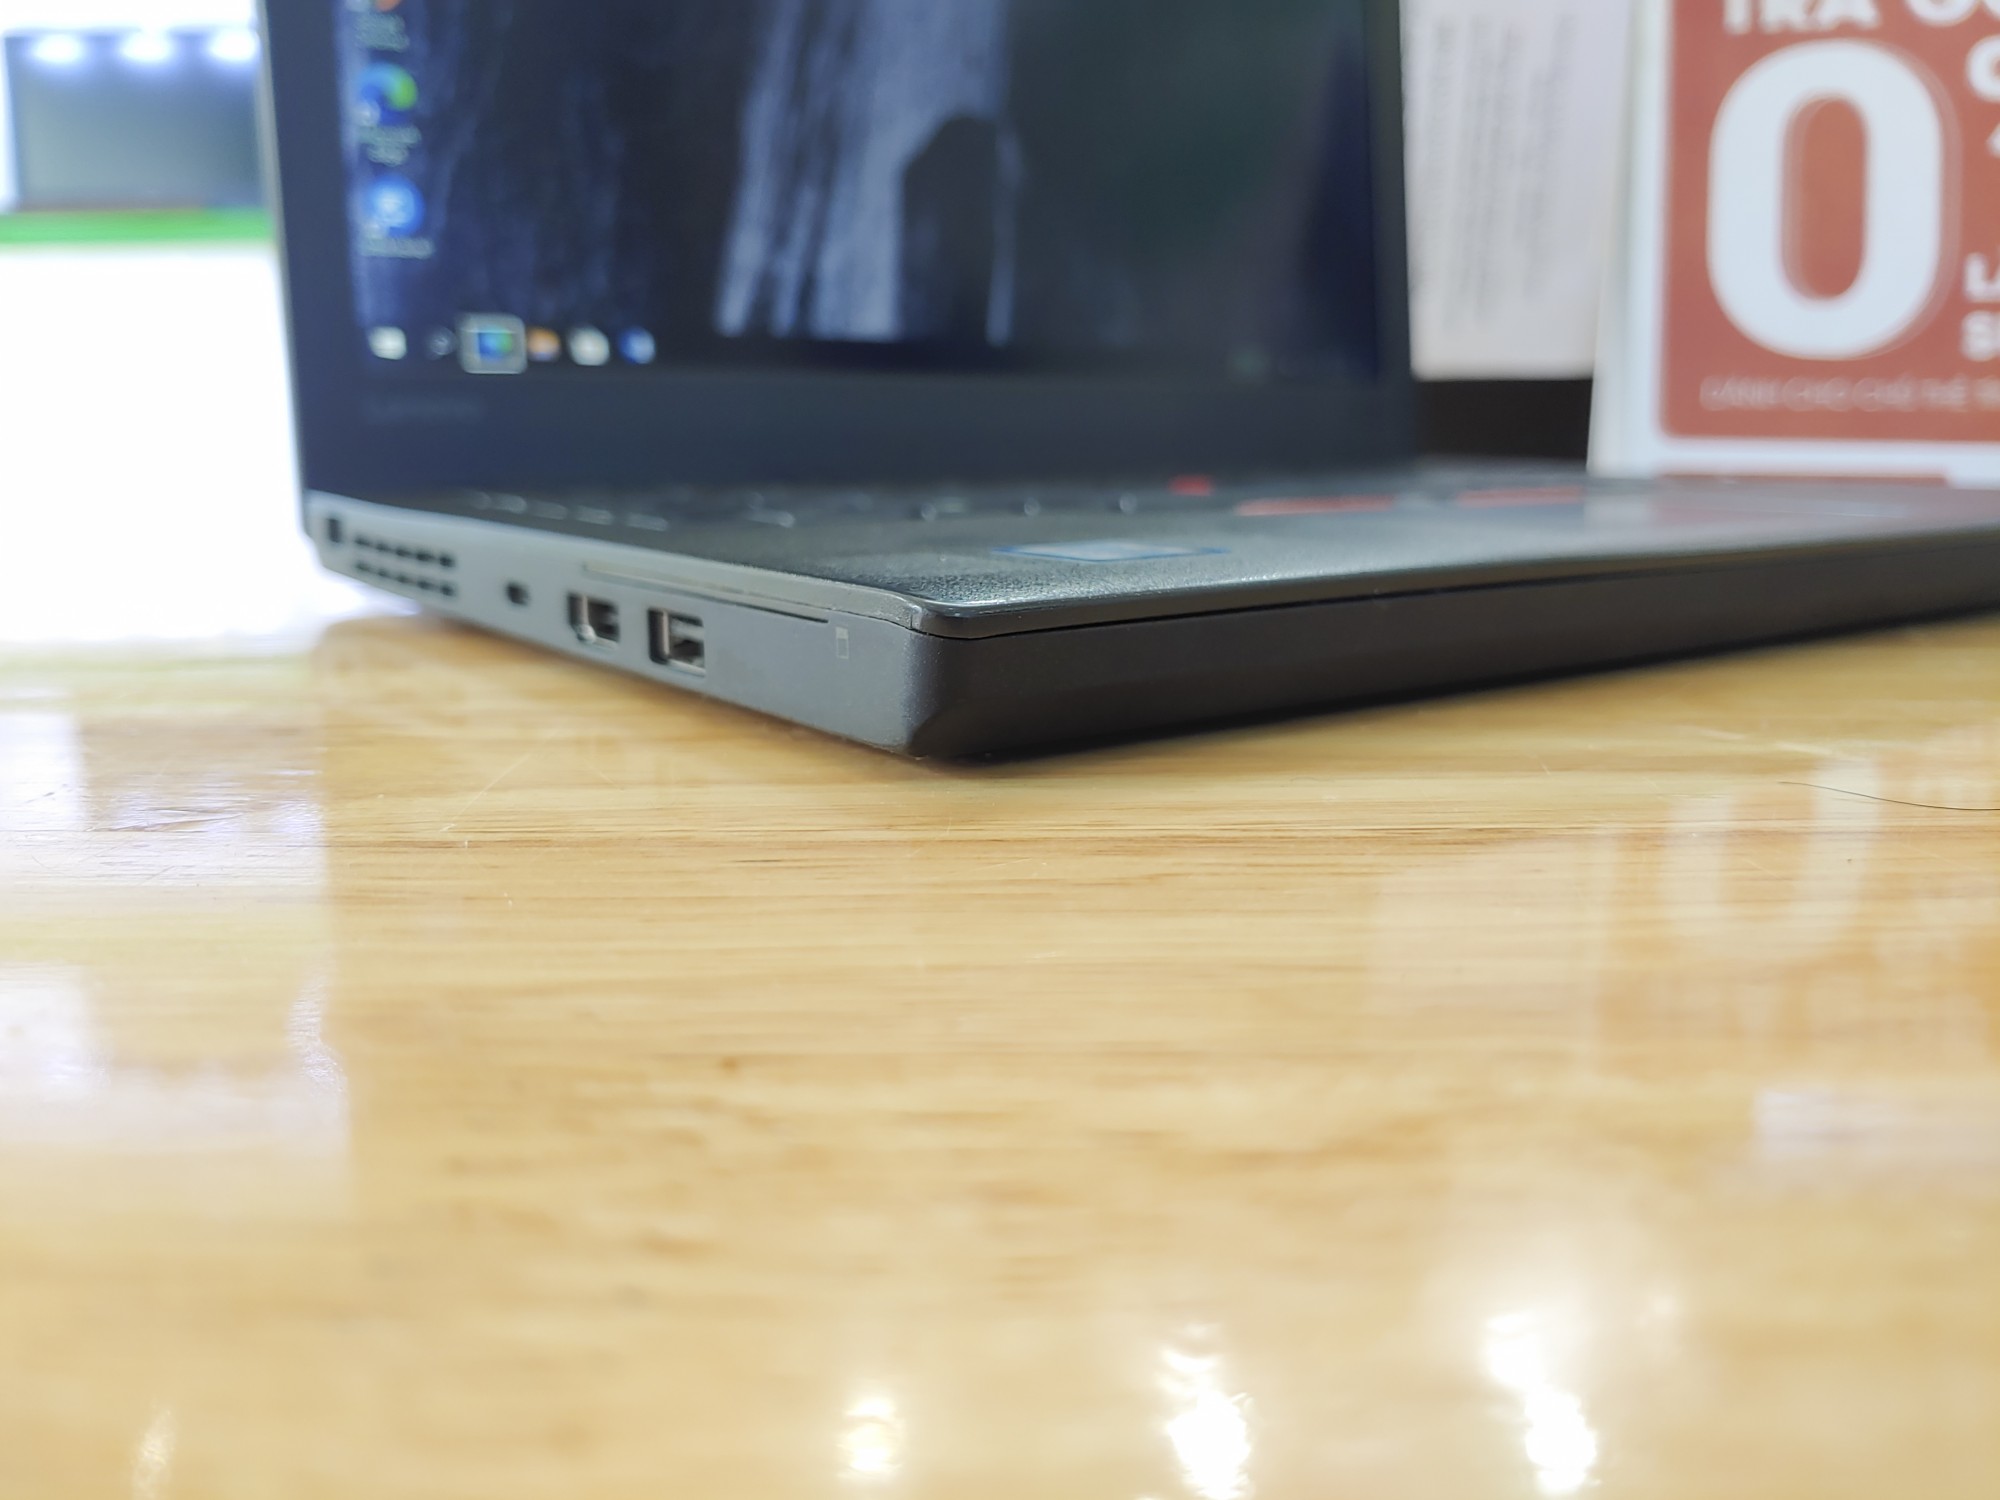 Laptop ThinkPad X270